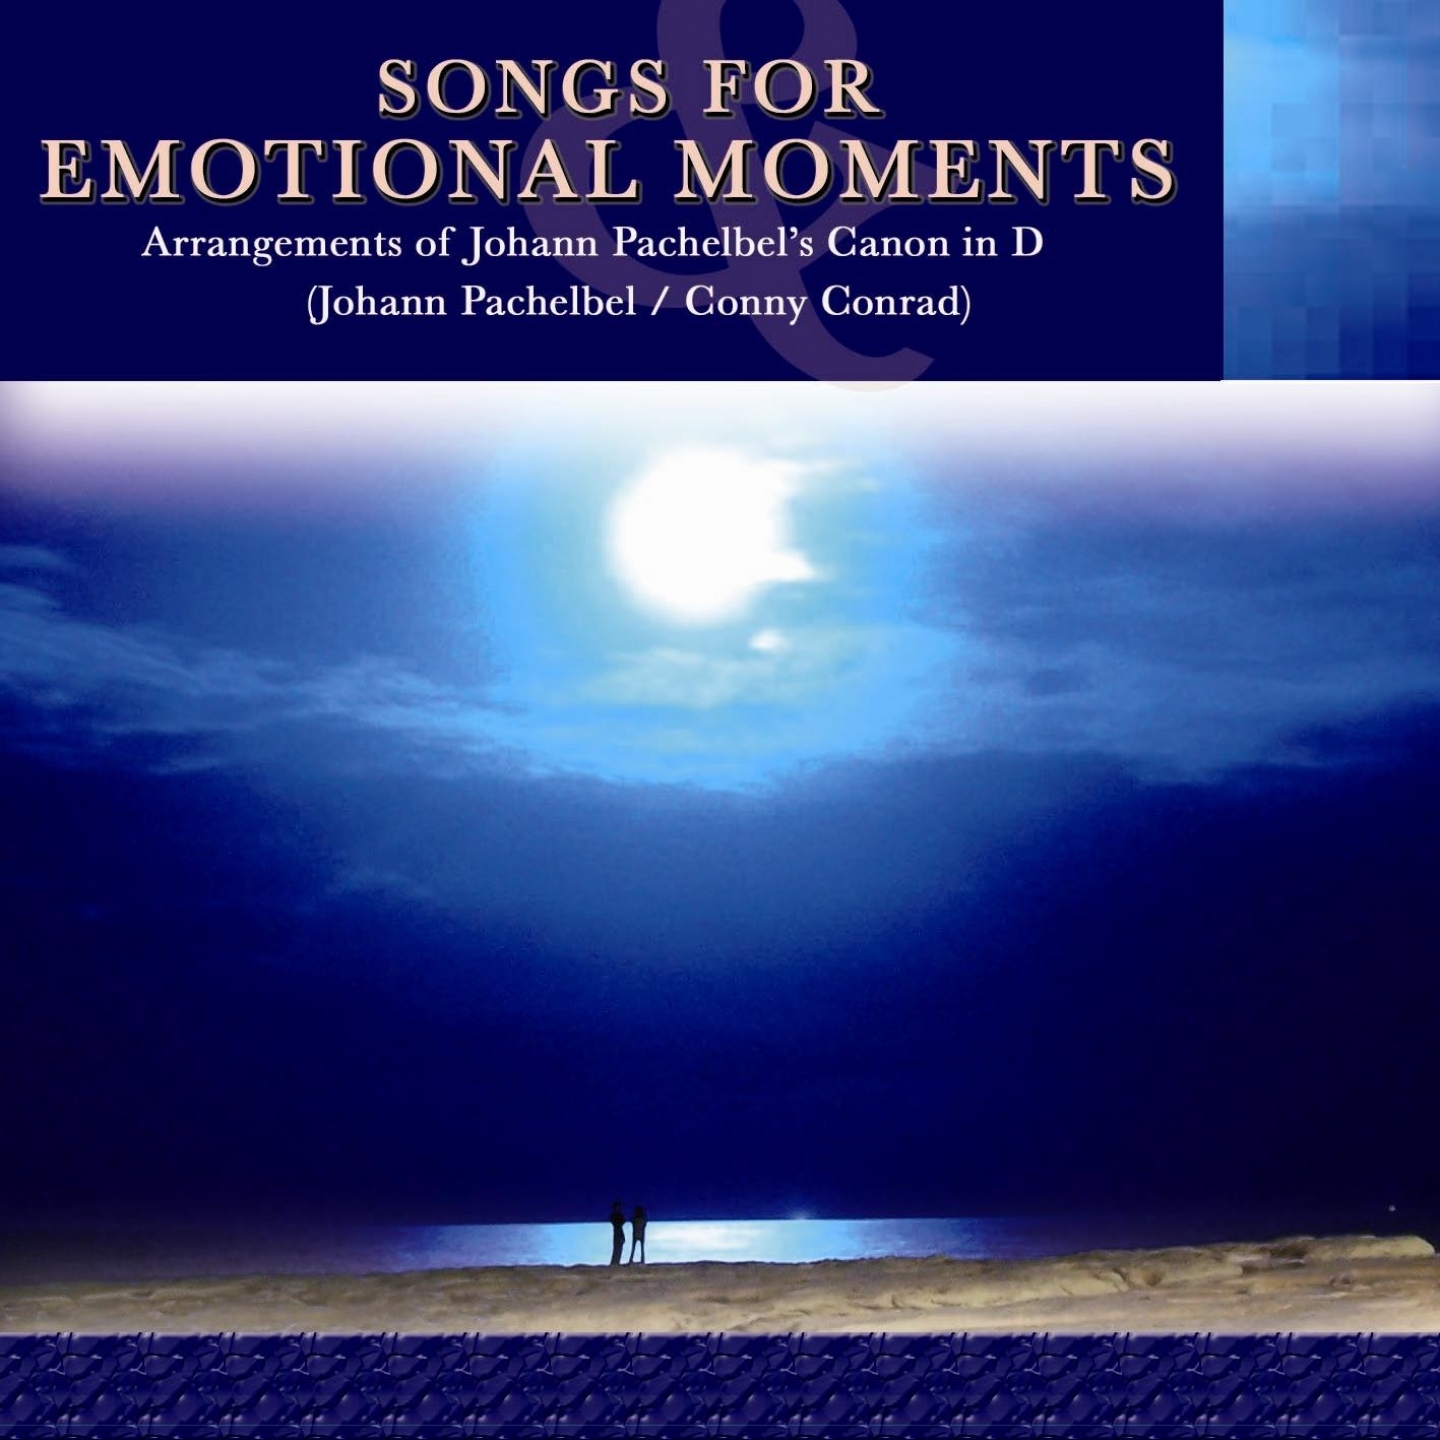 Songs for Emotional Moments - Arrangements of Johann Pachelbel